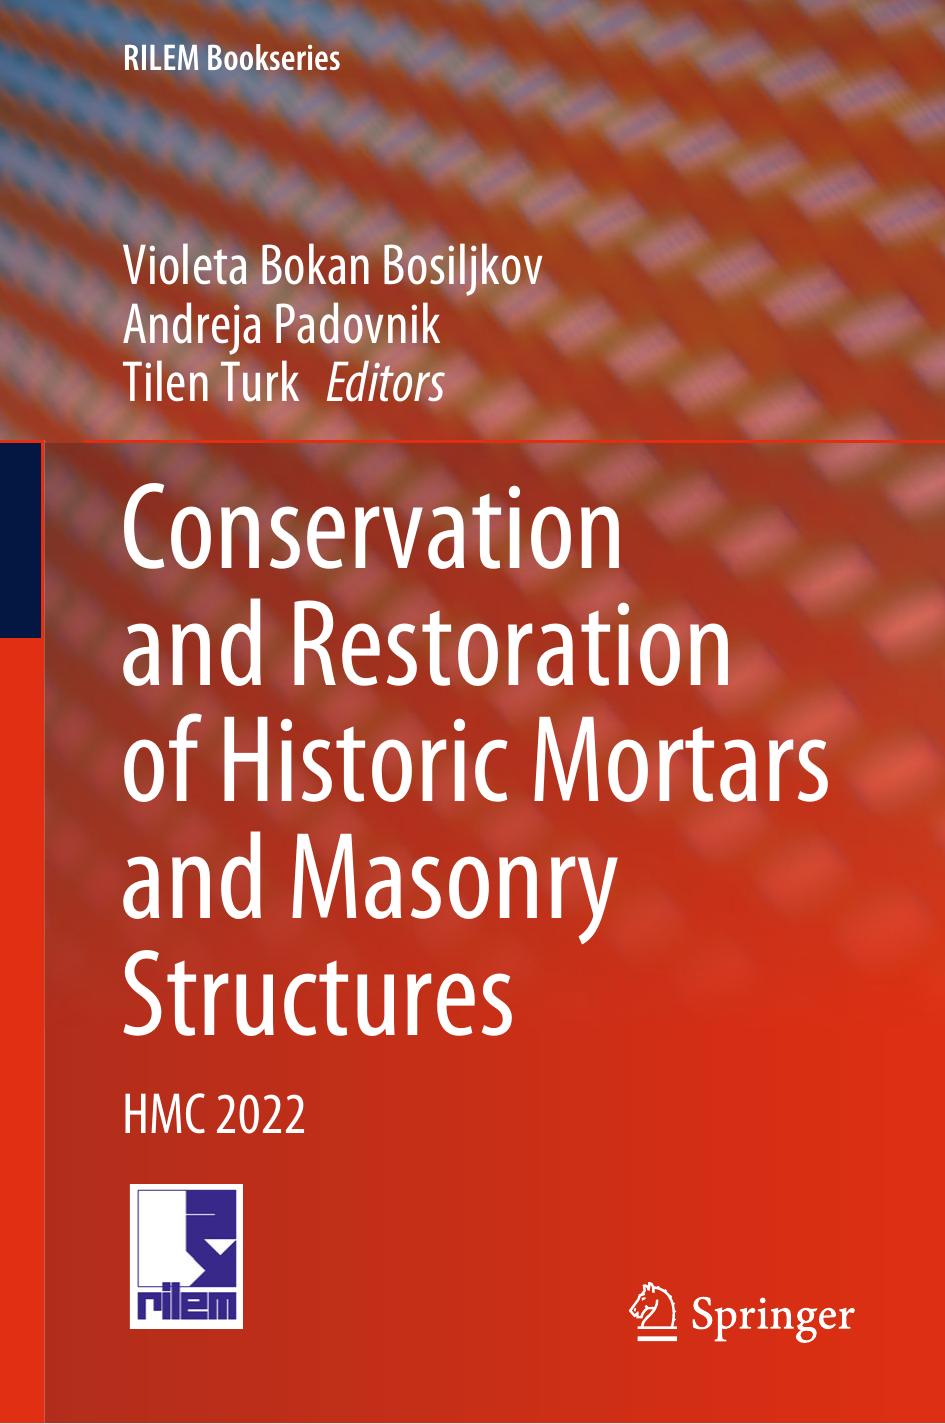 Conservation and Restoration of Historic Mortars and Masonry Structures: HMC 2022 by Violeta Bokan Bosiljkov Andreja Padovnik Tilen Turk